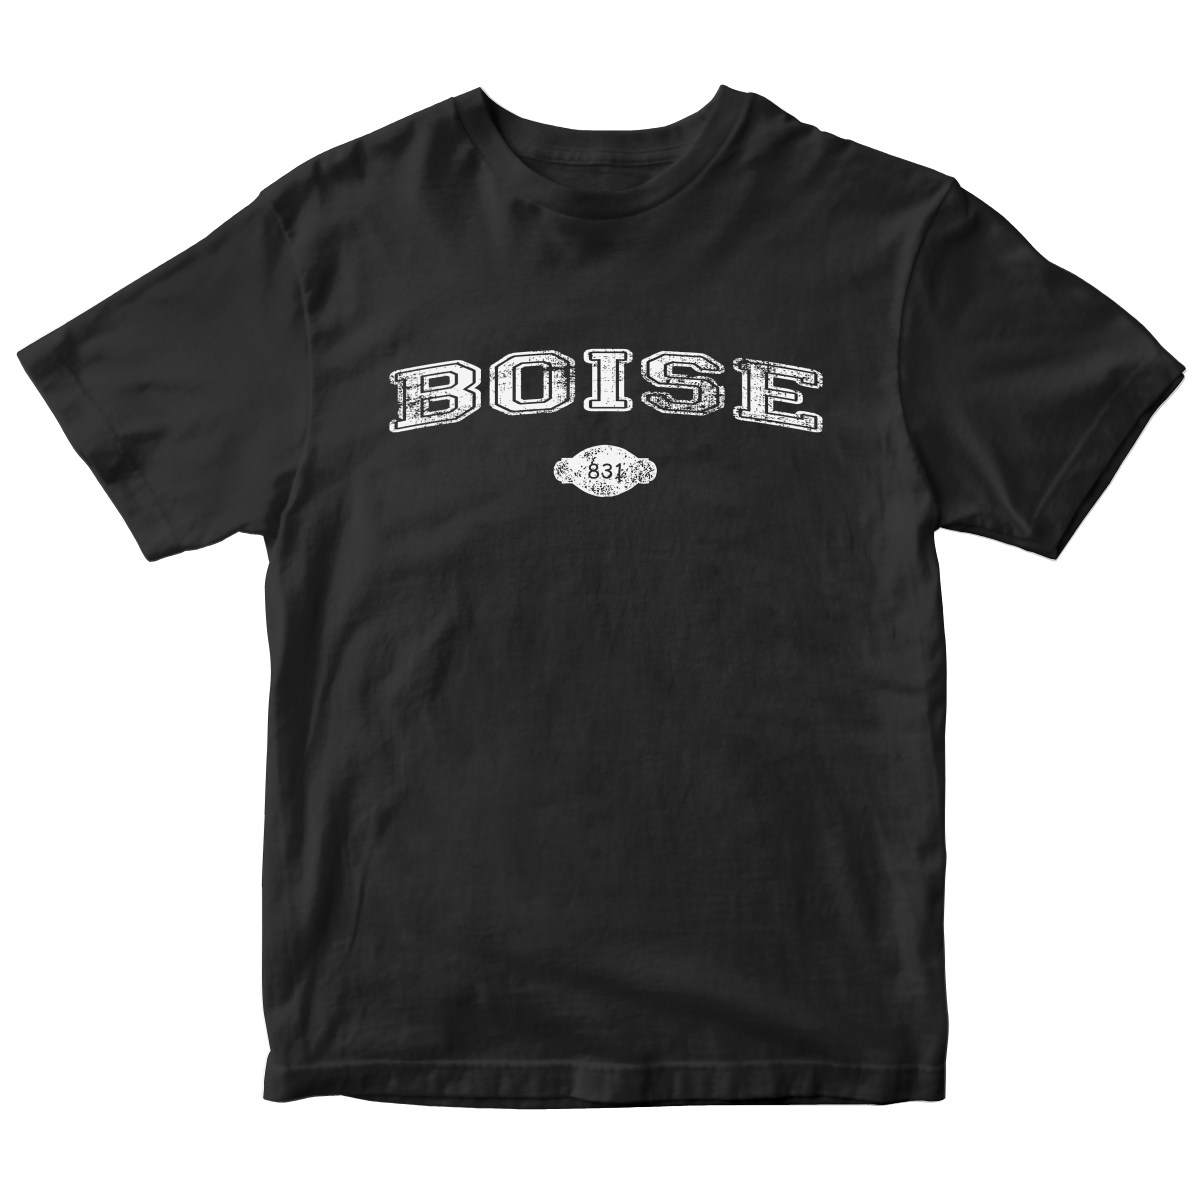 Boise 1863 Represent Kids T-shirt | Black